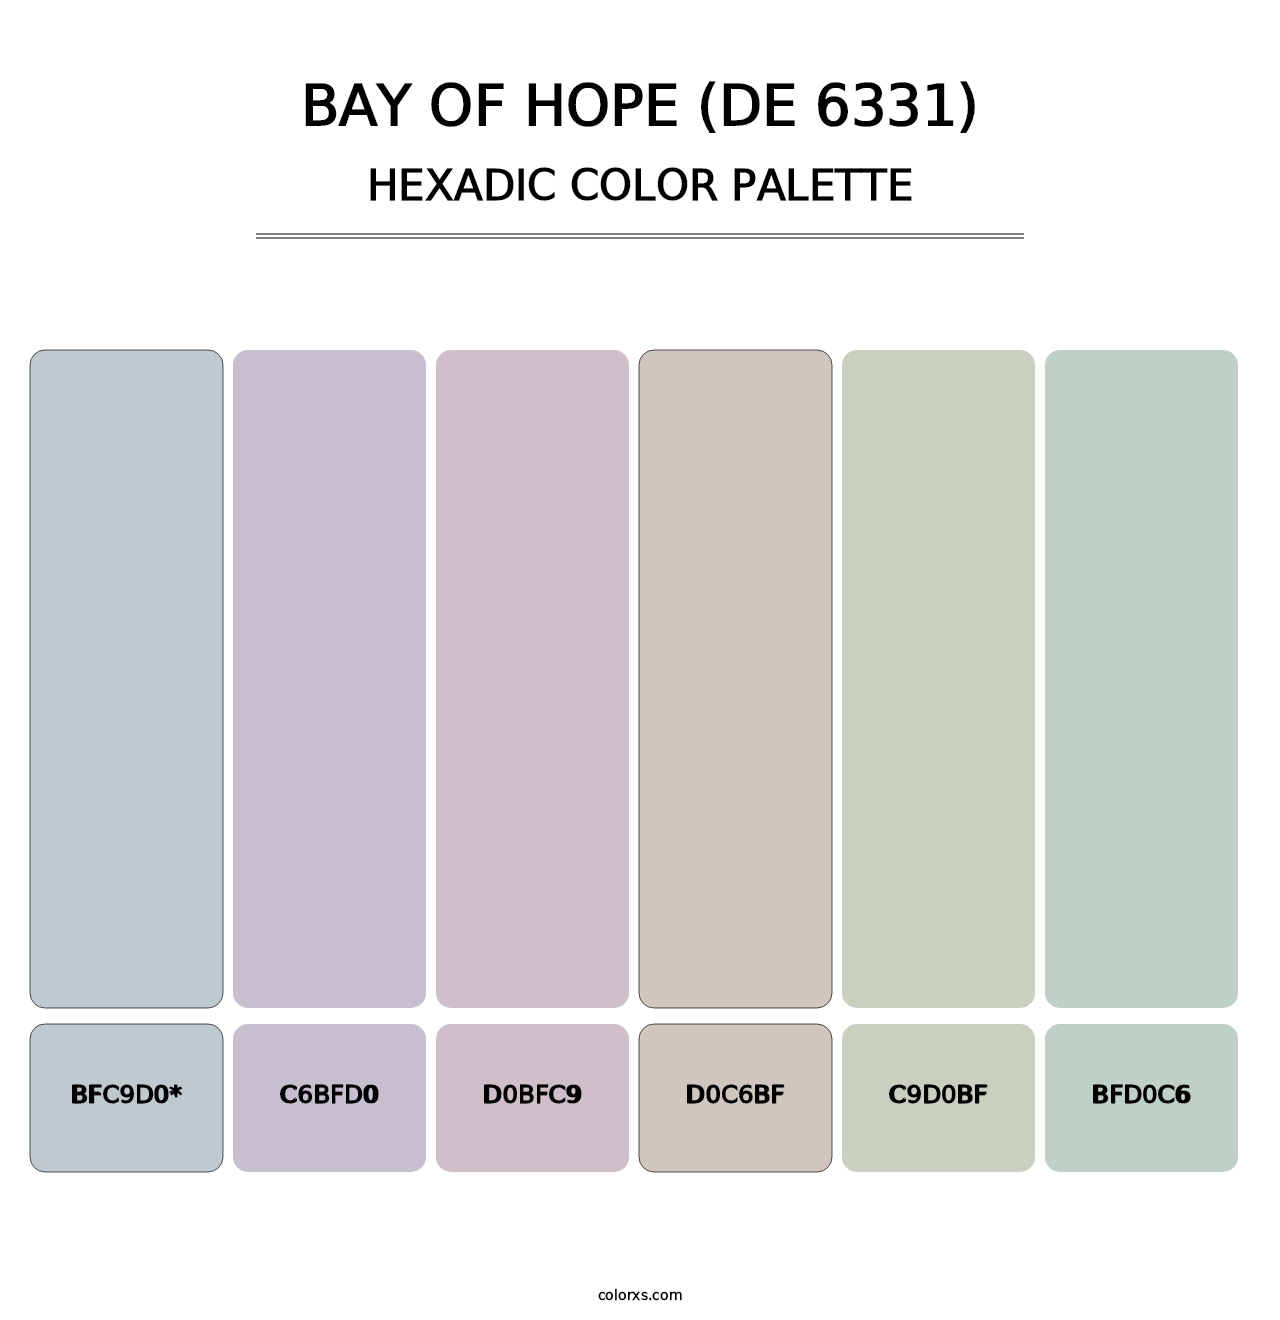 Bay of Hope (DE 6331) - Hexadic Color Palette